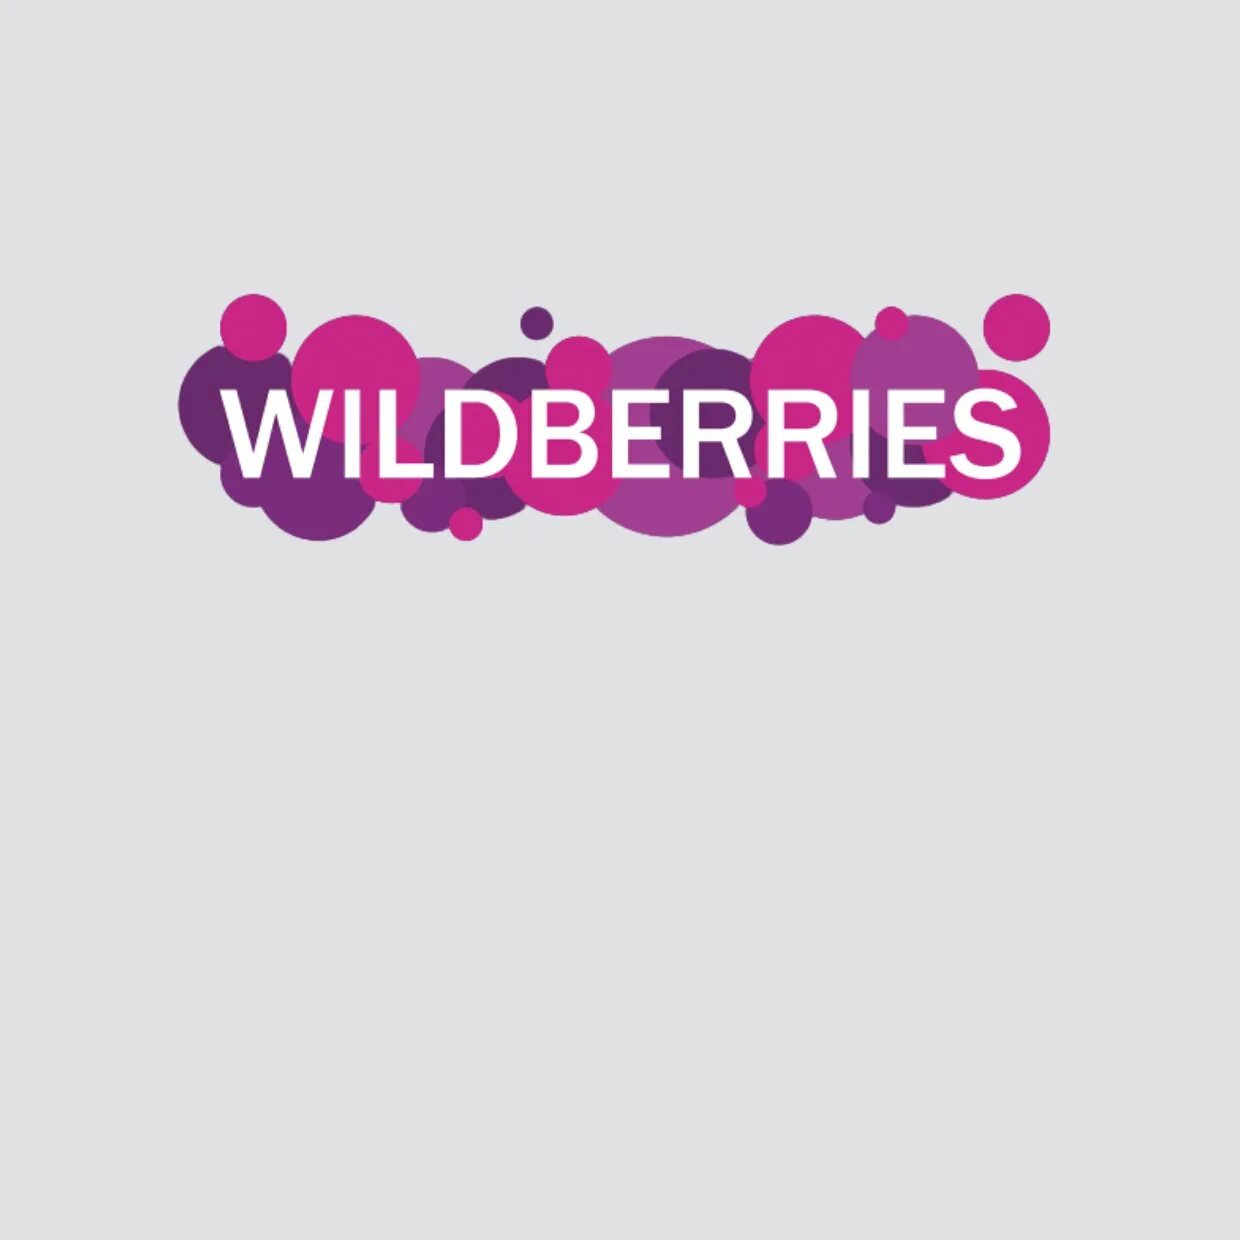 Wildberries лого. Надпись Wildberries. Wildberries обучение. Логотип Wildberries на прозрачном фоне.